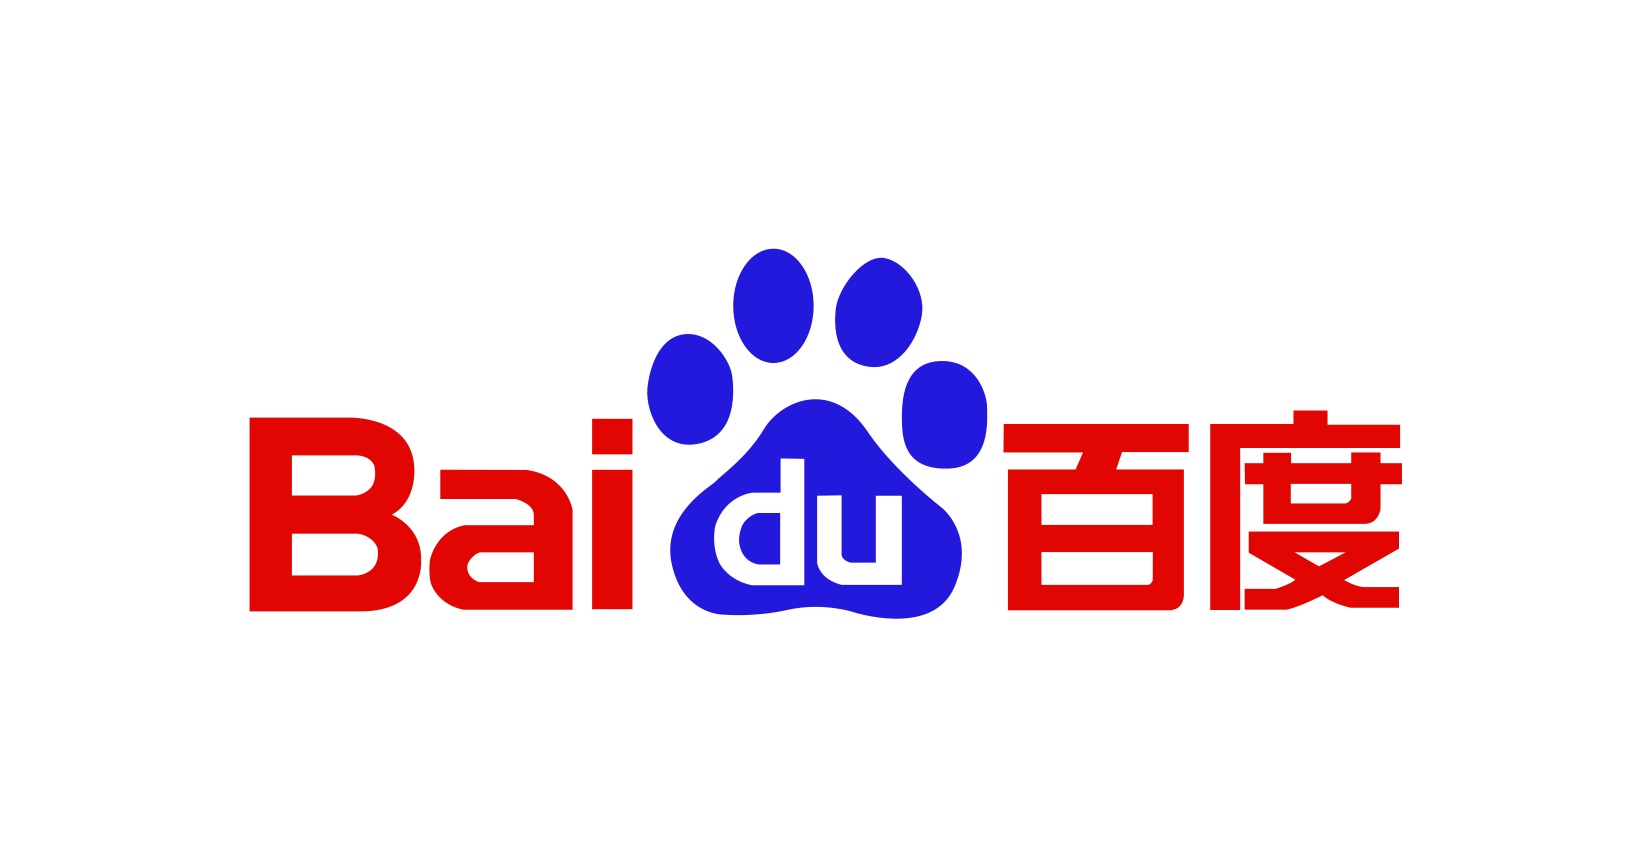 Baidu เตรียมเปิดตัวแชตบอตแบบ ChatGPT